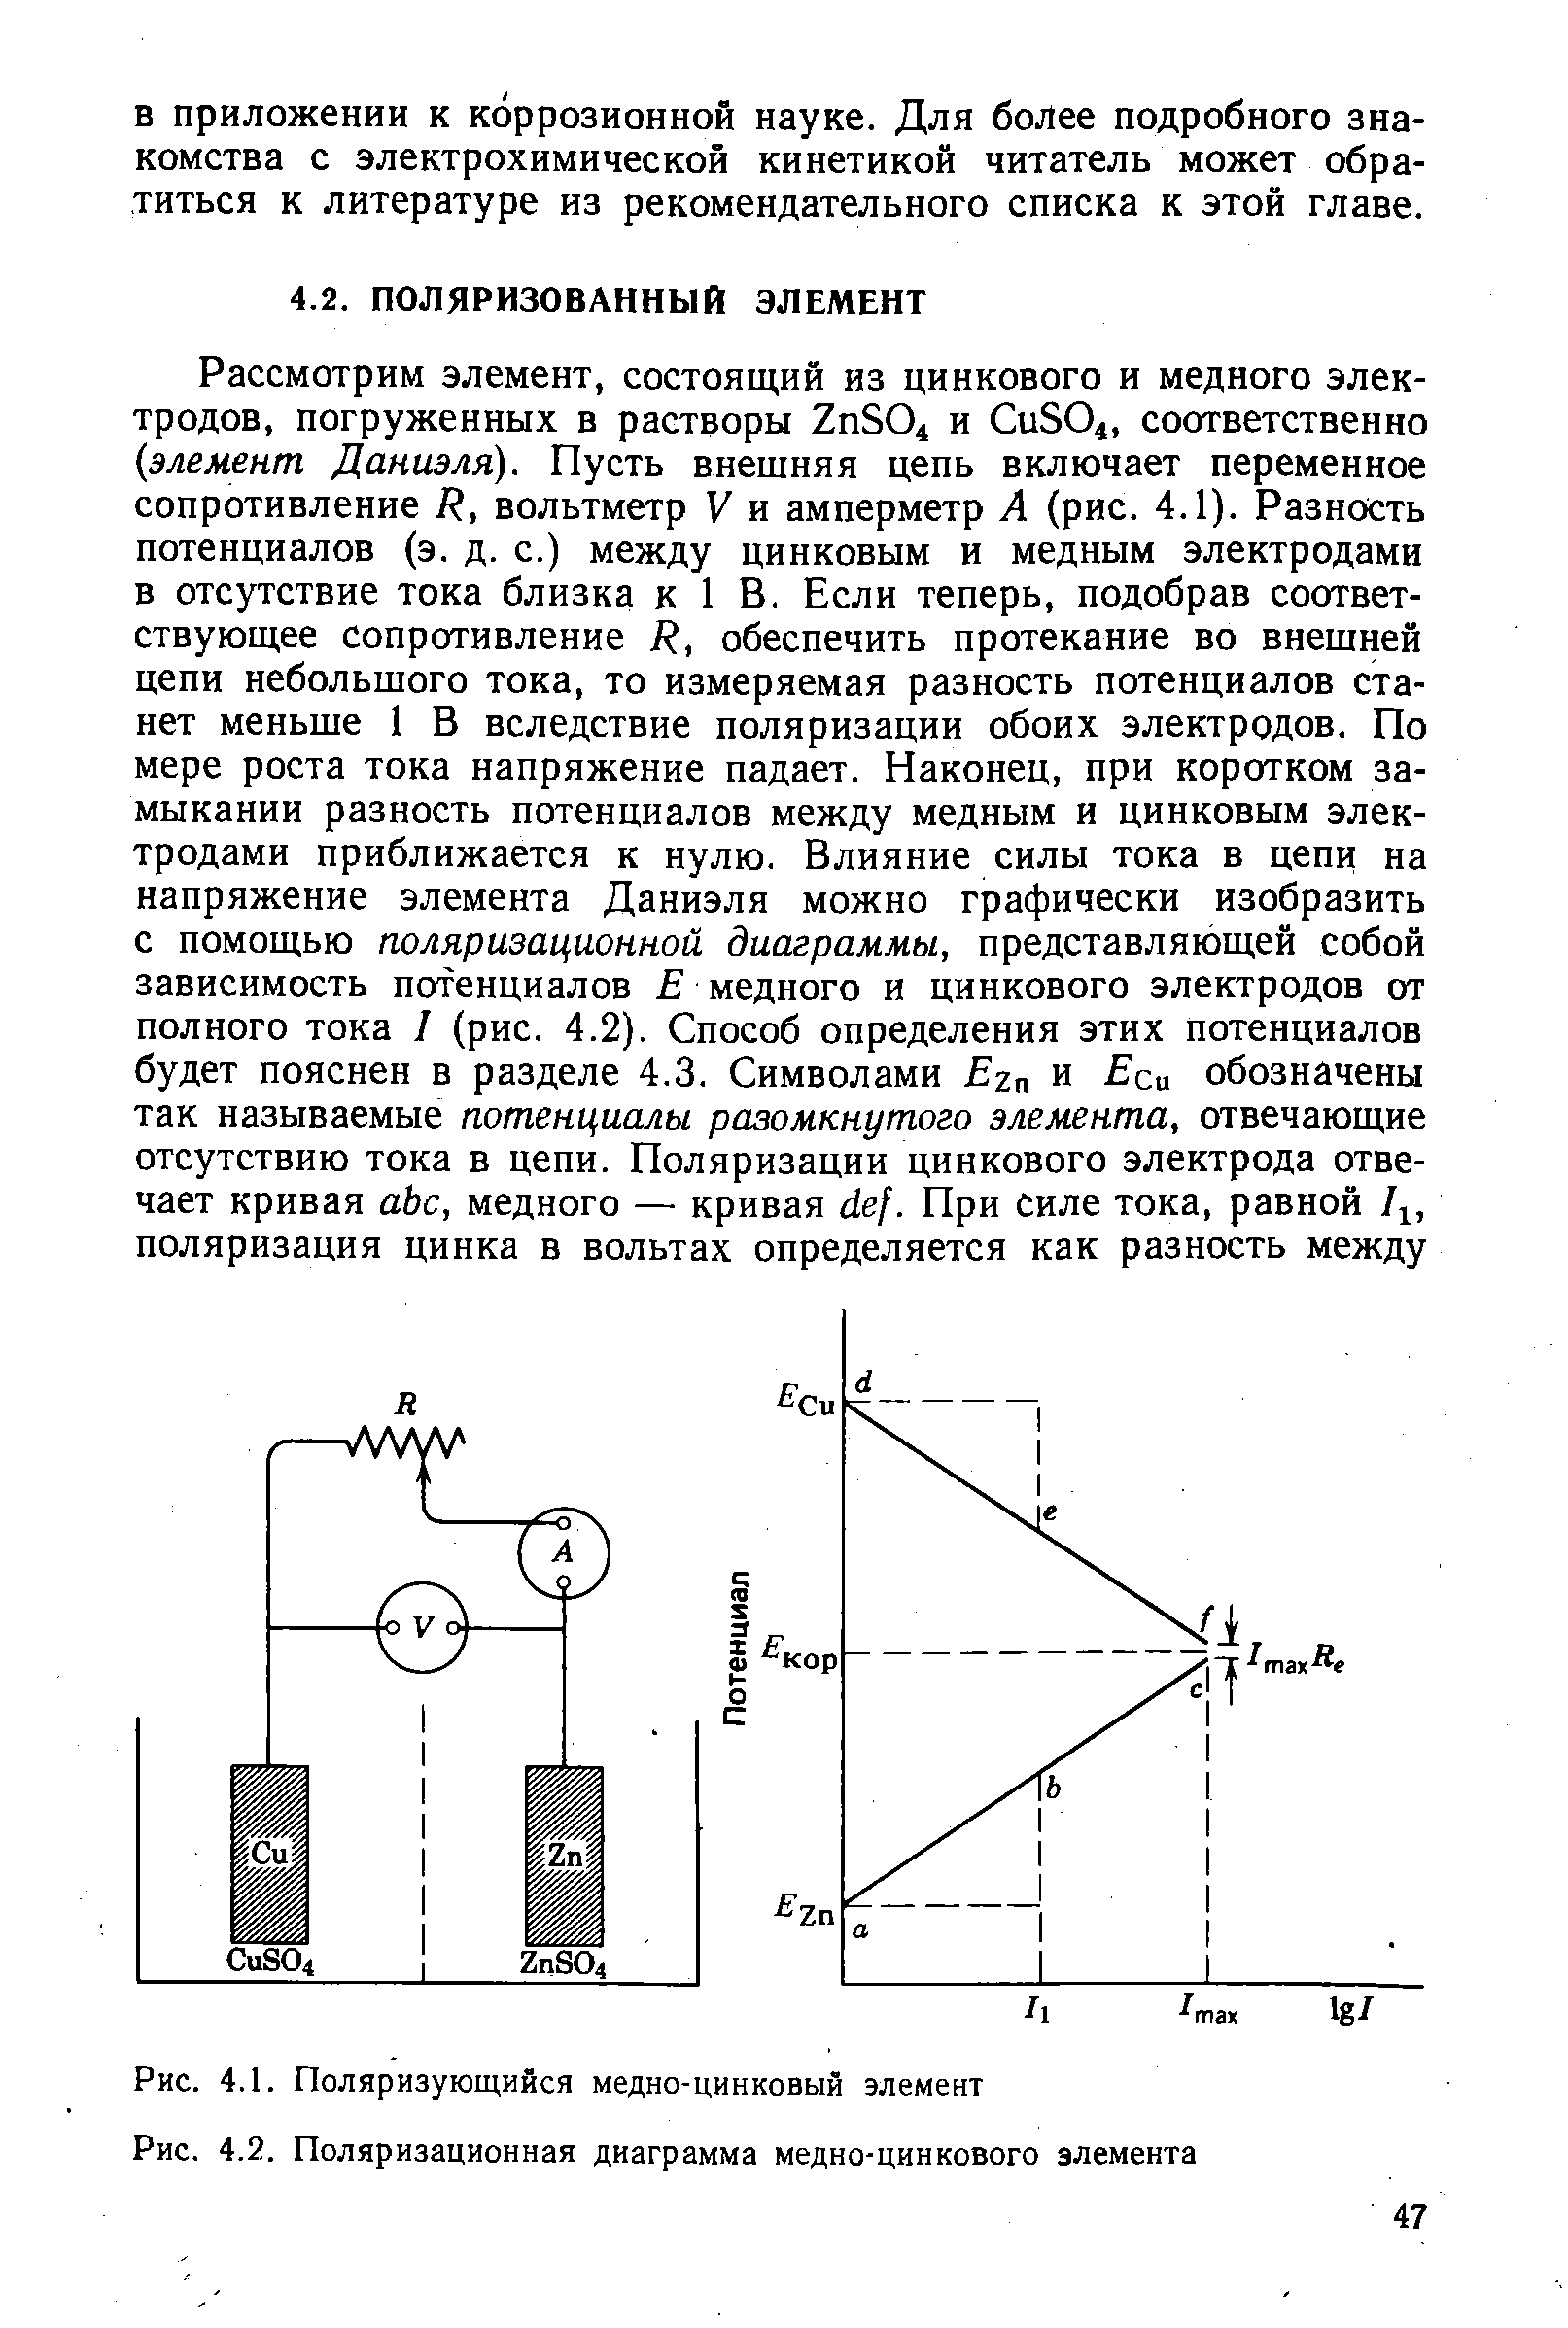 Рис. 4.2. Поляризационная диаграмма медно-цинкового элемента